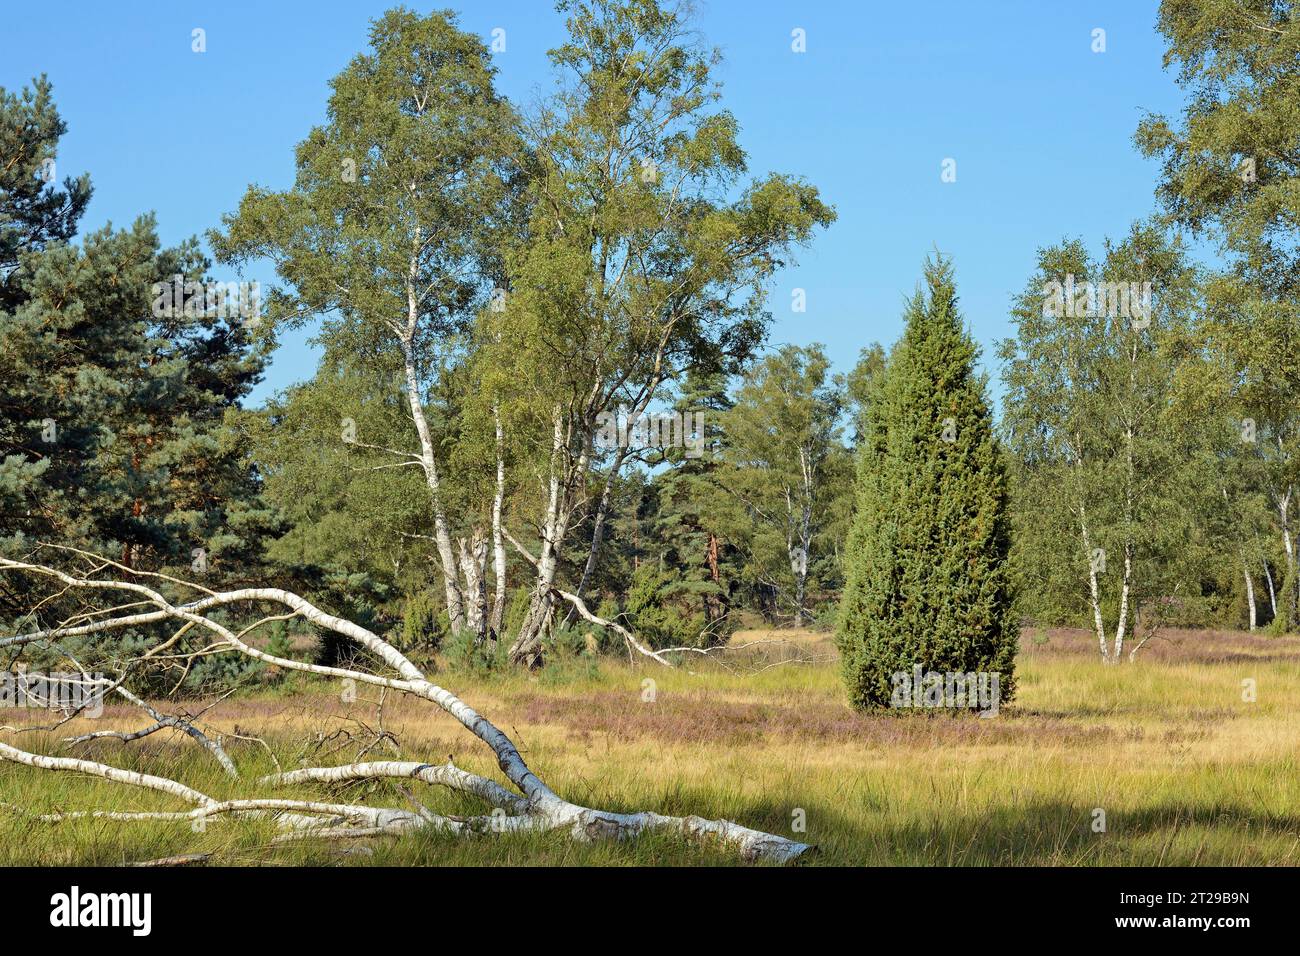 Heathland, typical vegetation, juniper (Juniperus communis), birch (Betula), pine (Pinus), deadwood and flowering common heather (Calluna Vulgaris) Stock Photo